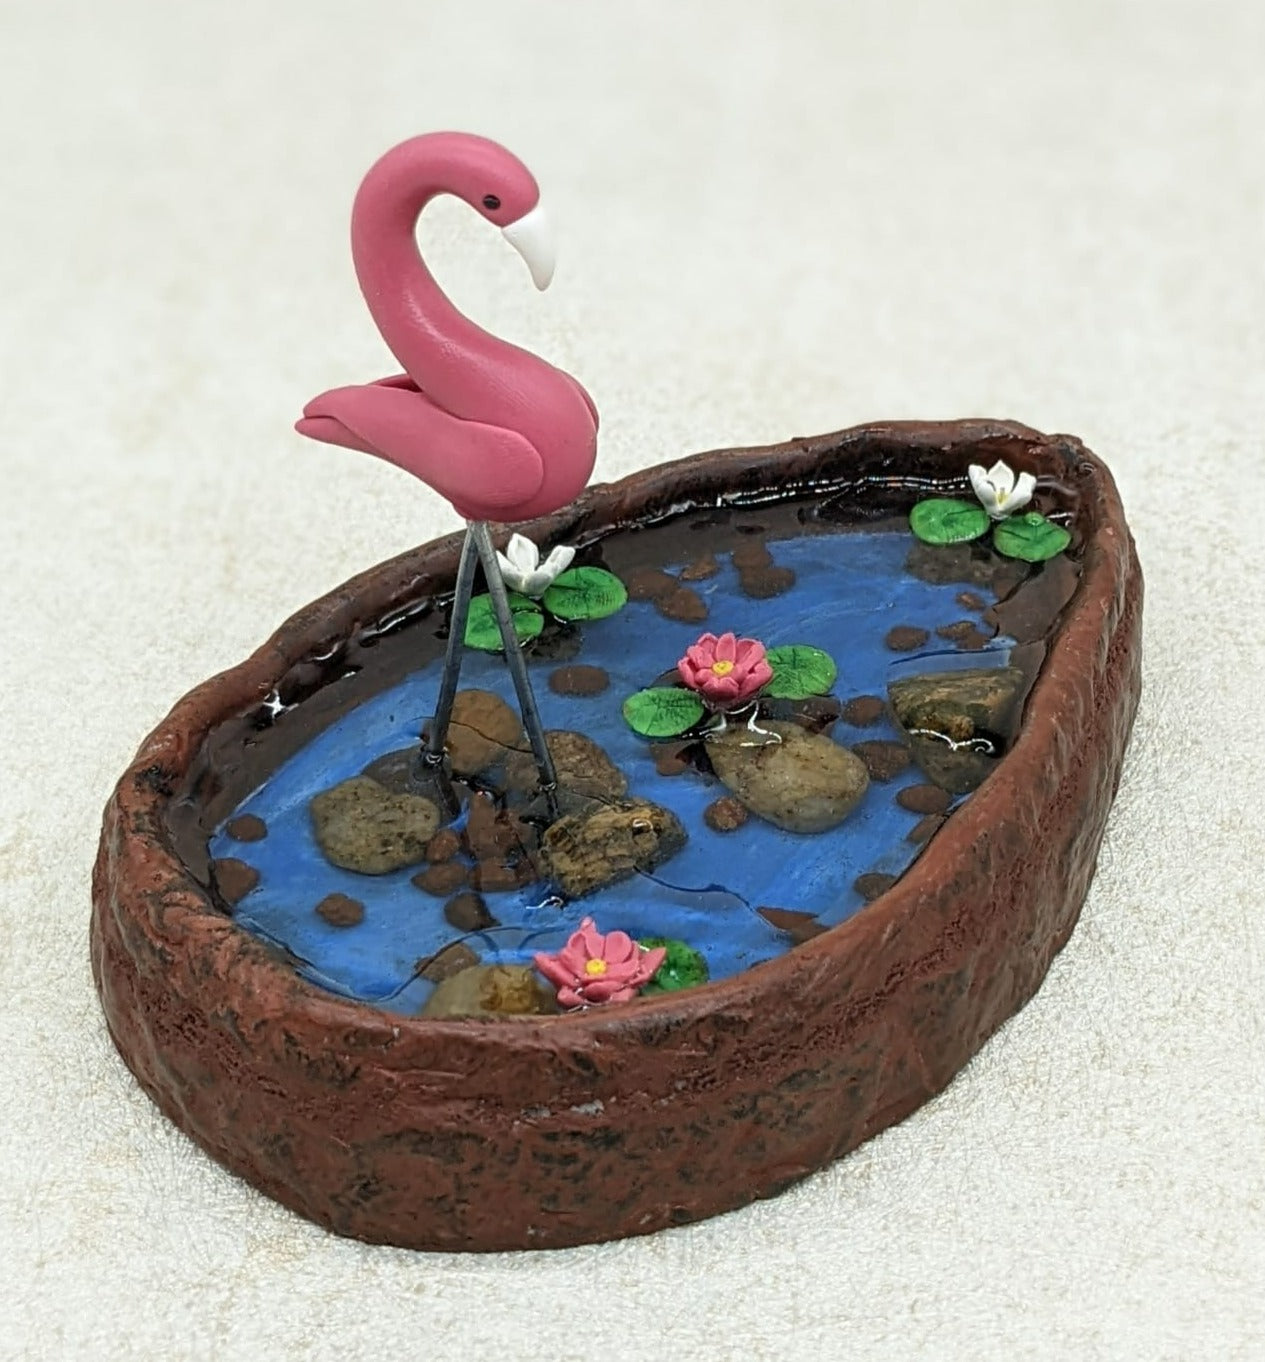 Flamingo in Lotus pond